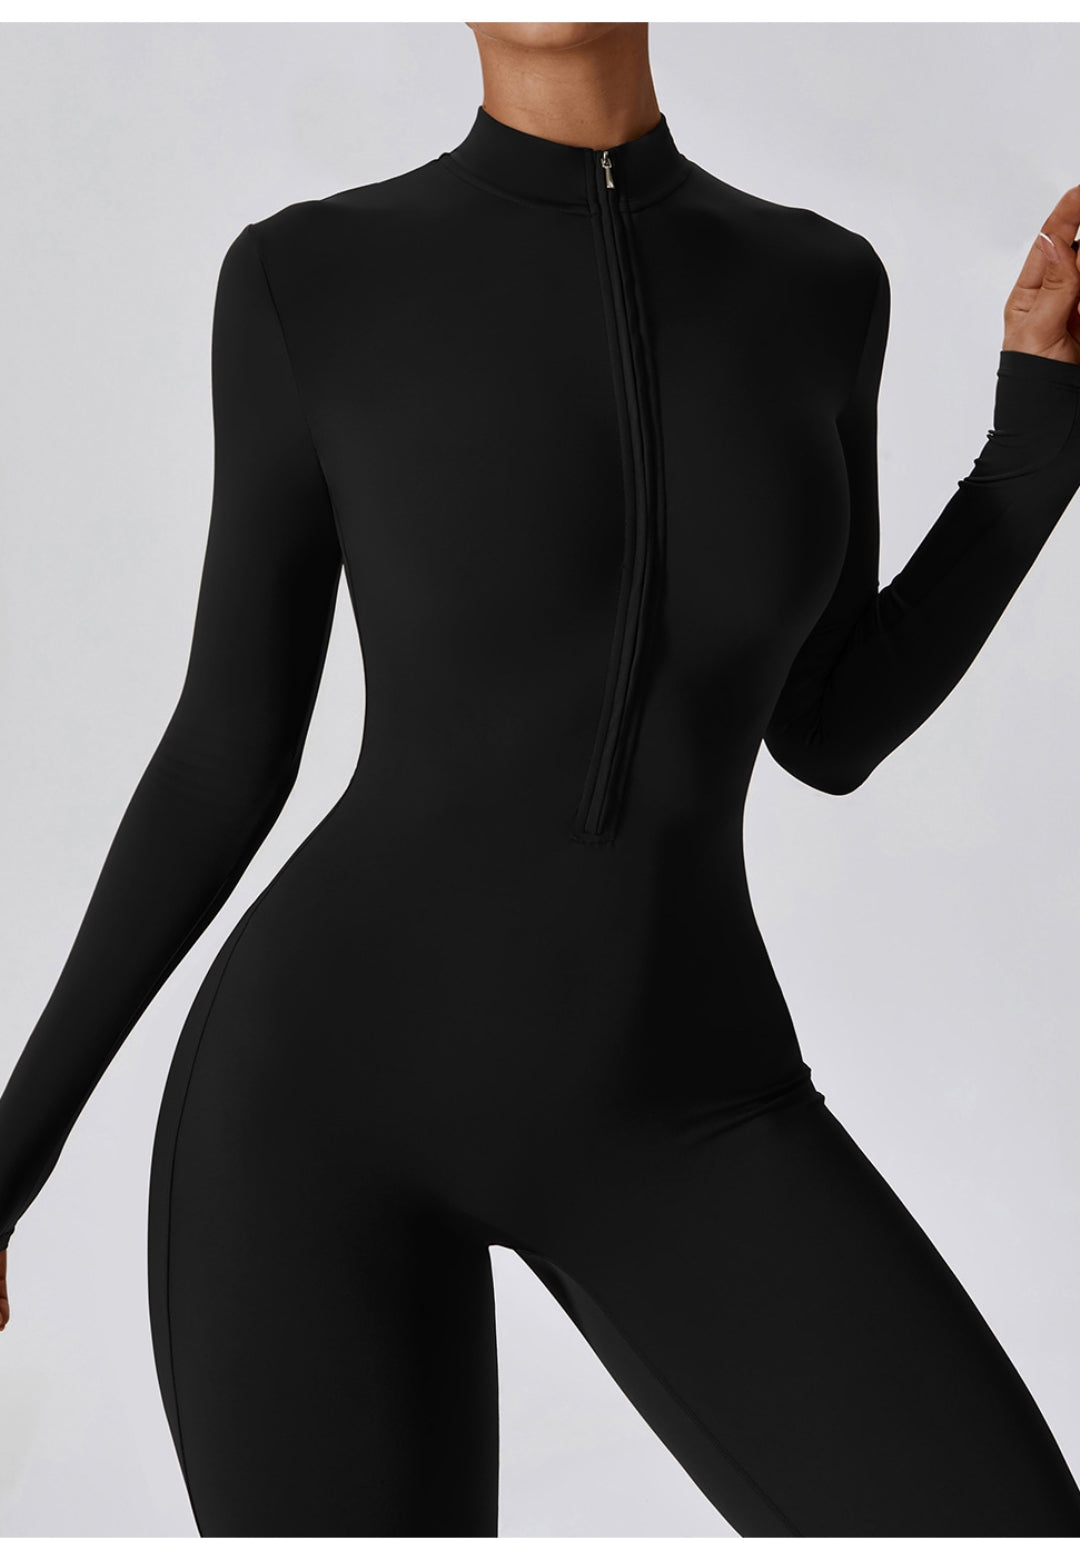 Black Zipper Long Sleeved Fitness Training Workout Bodysuit